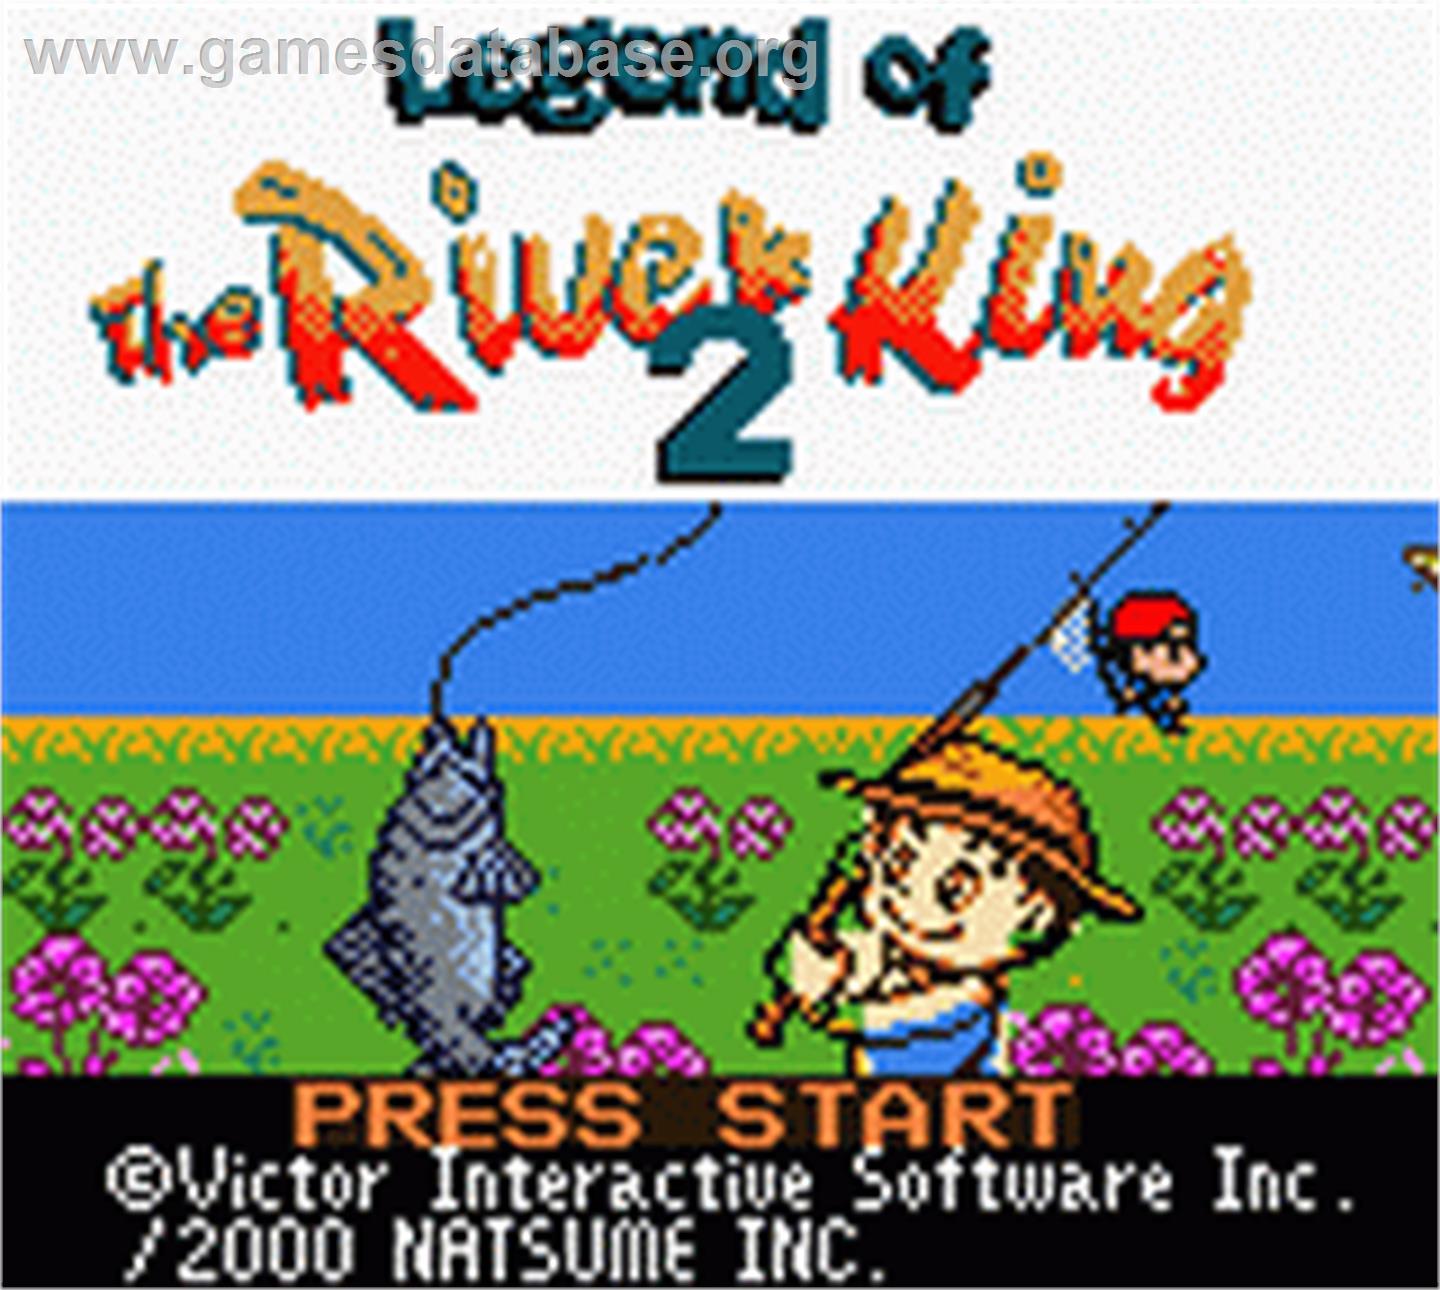 Legend of the River King 2 - Nintendo Game Boy Color - Artwork - Title Screen